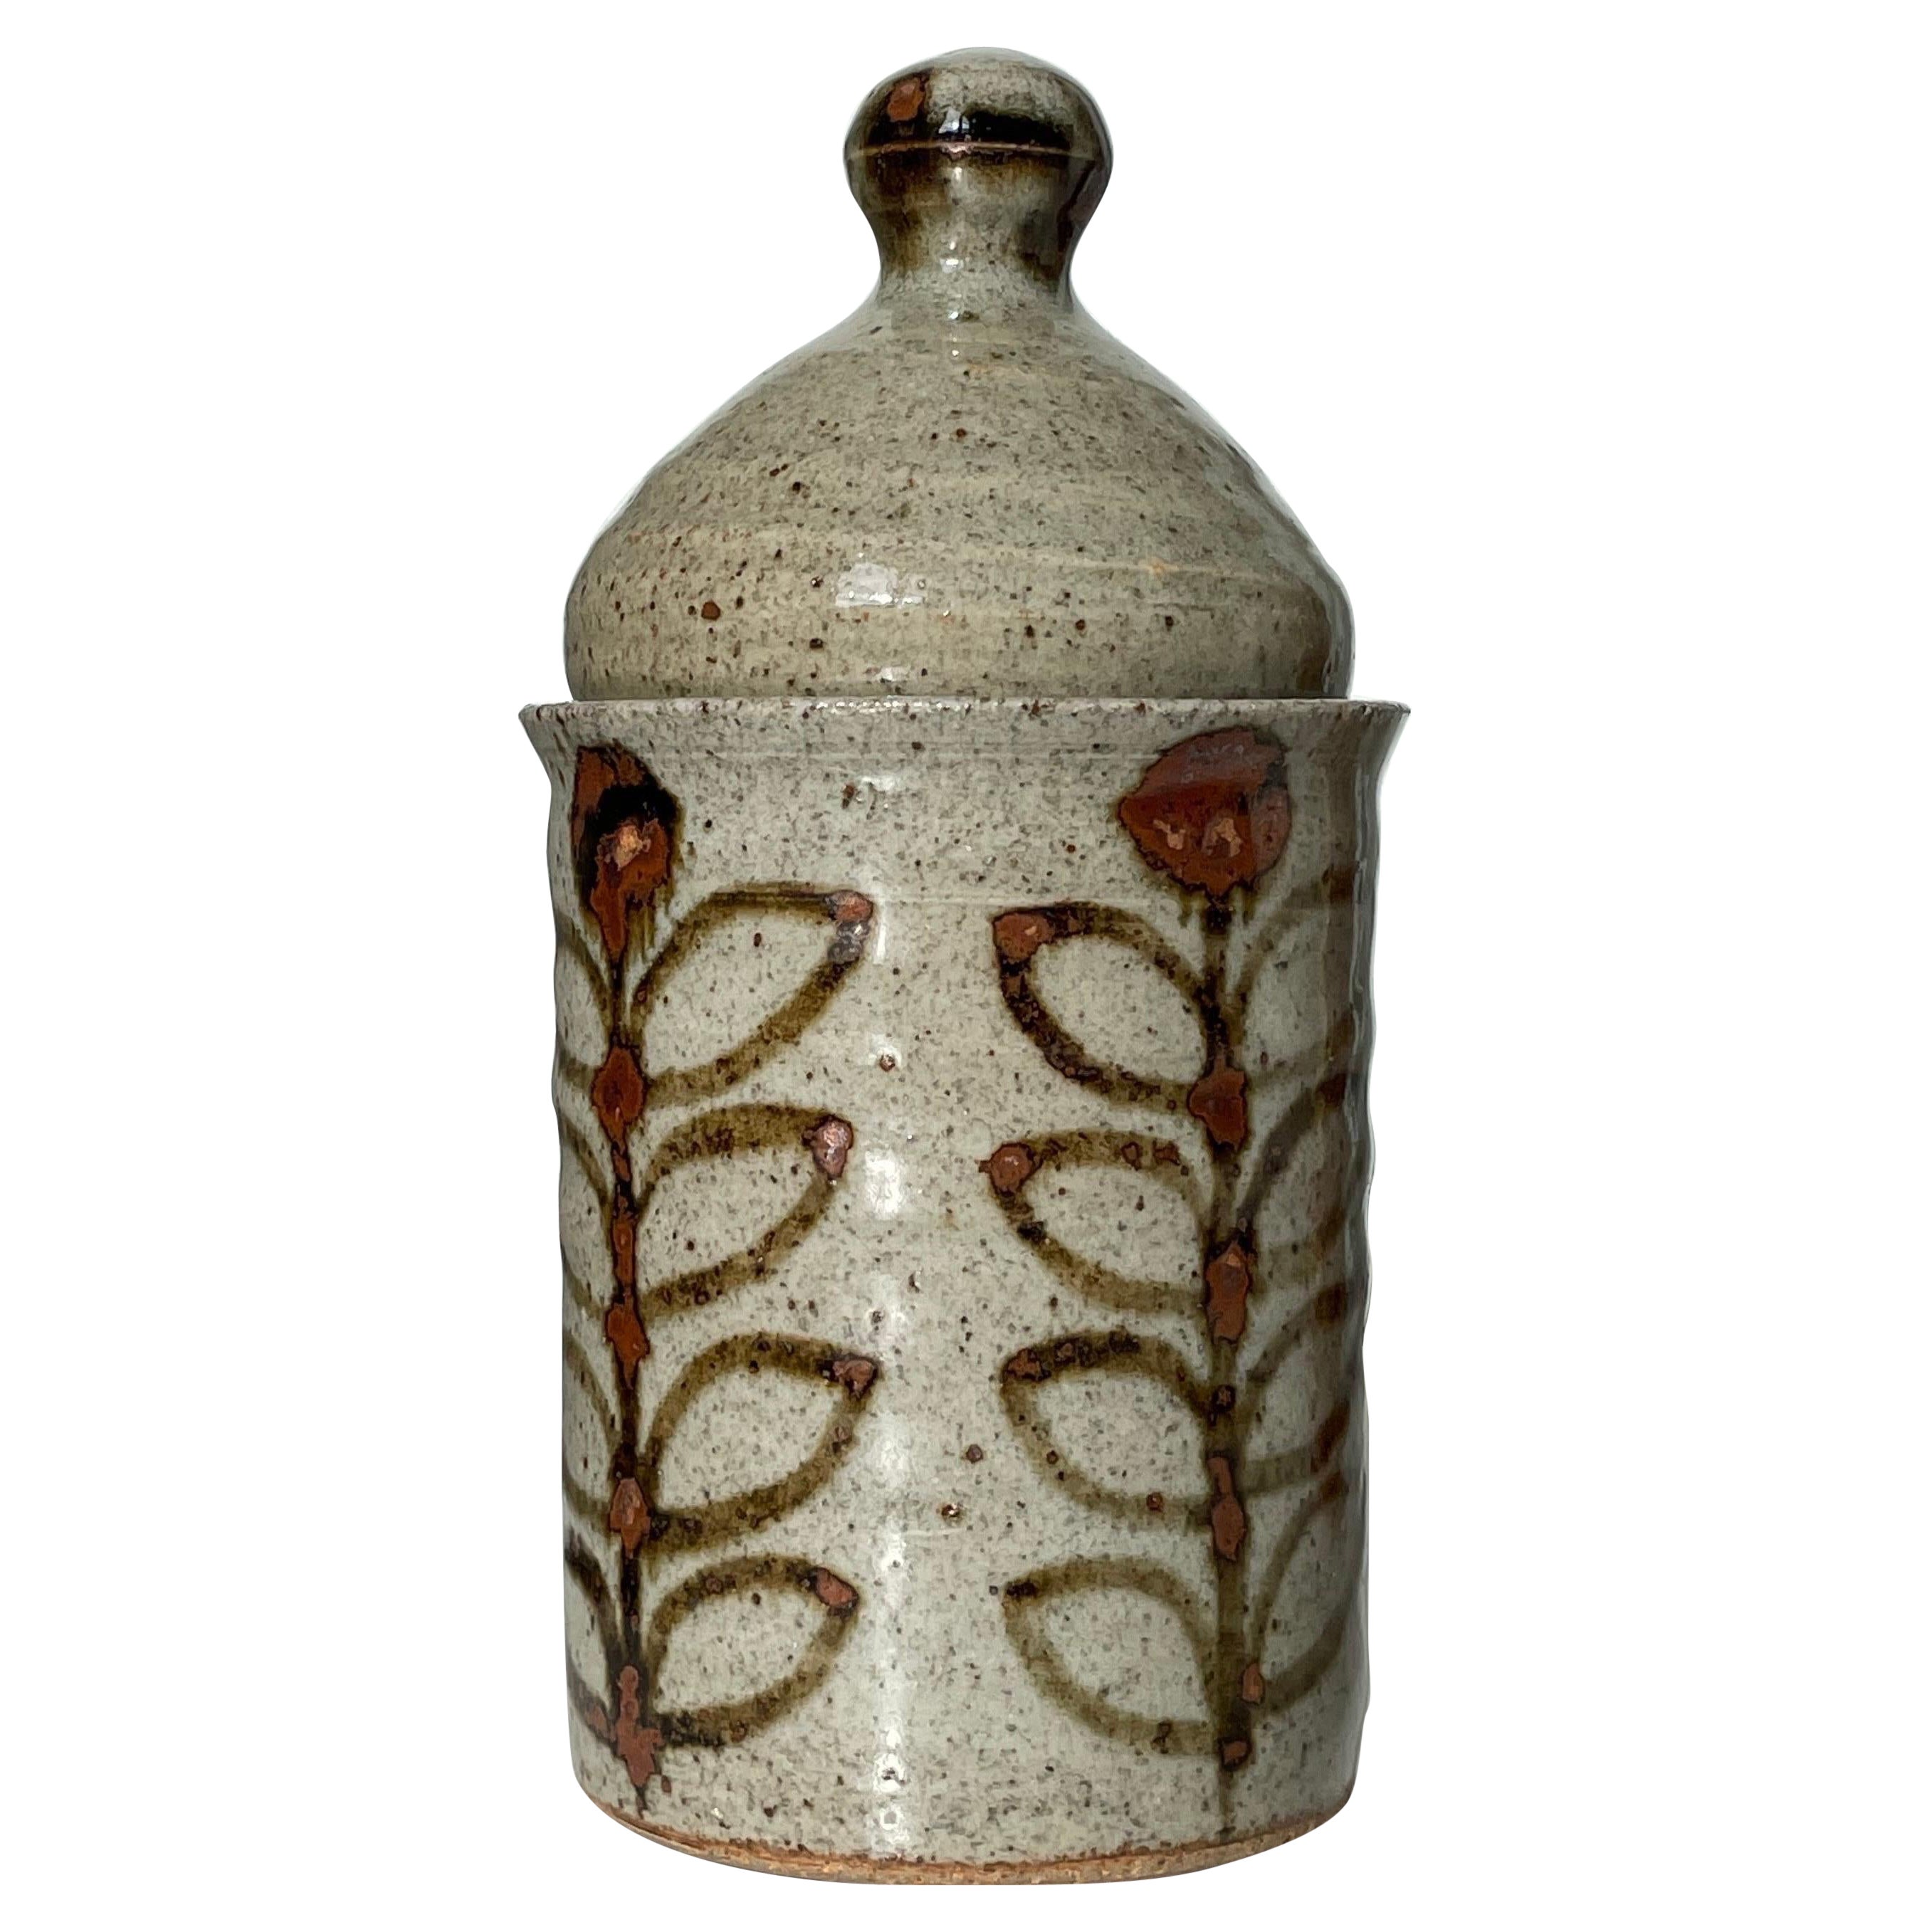 Artisanal French Vintage Ceramic Earthtone Lidded Jar